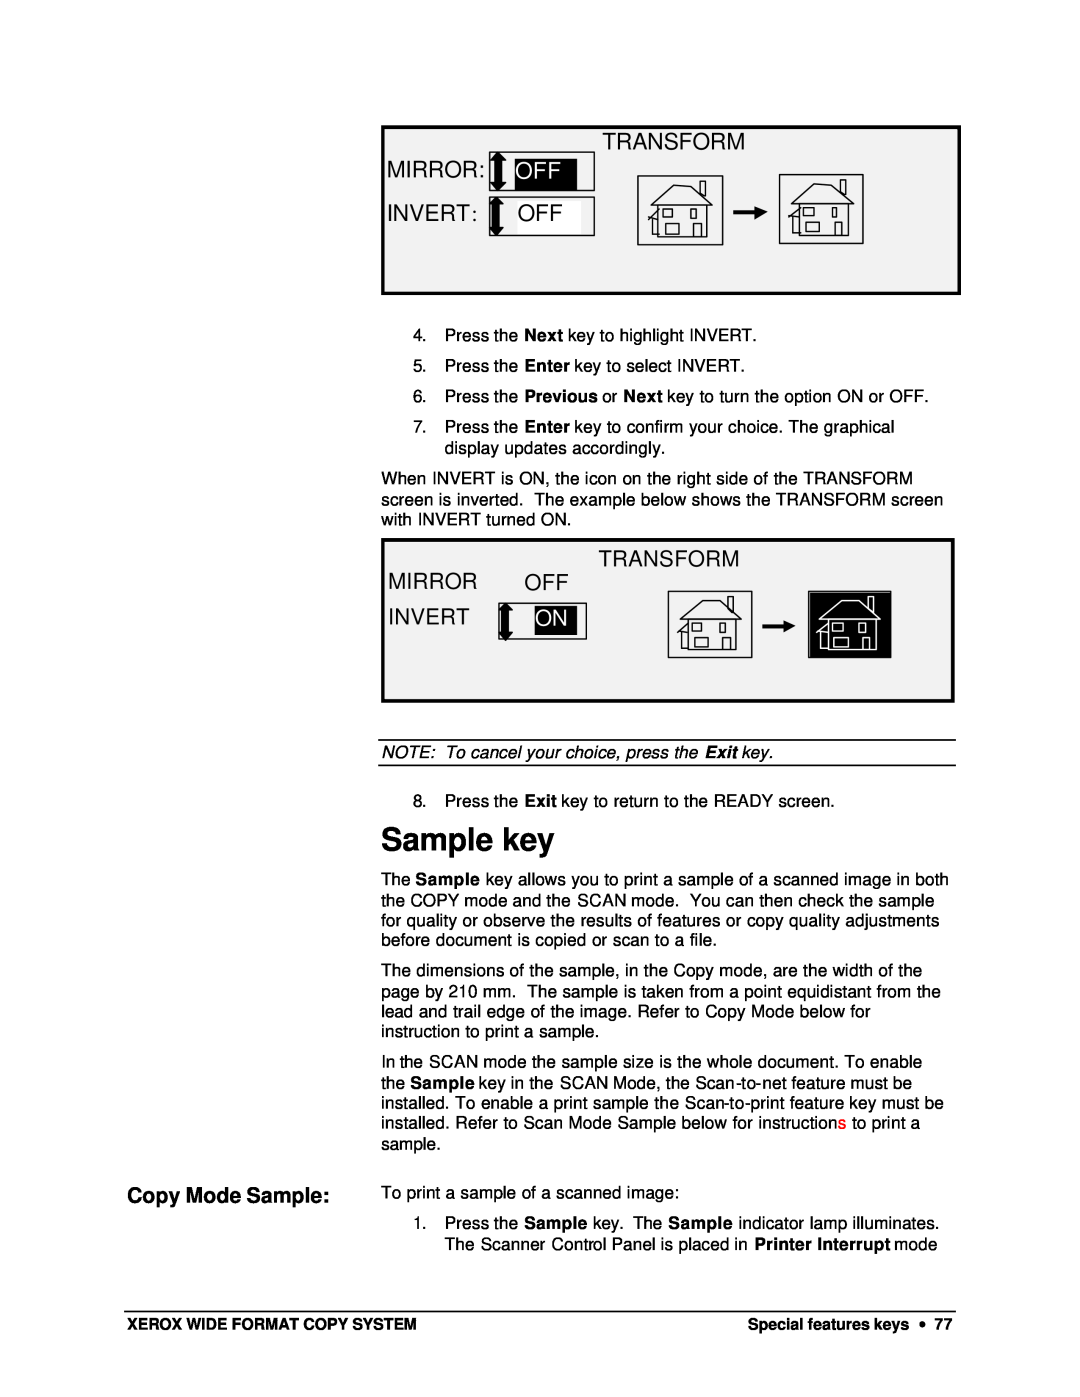 Xerox X2, 8825, 8850, 8830 manual Sample key, Mirror Invert, Transform Off, Transform Mirror: Off Invert: Off 